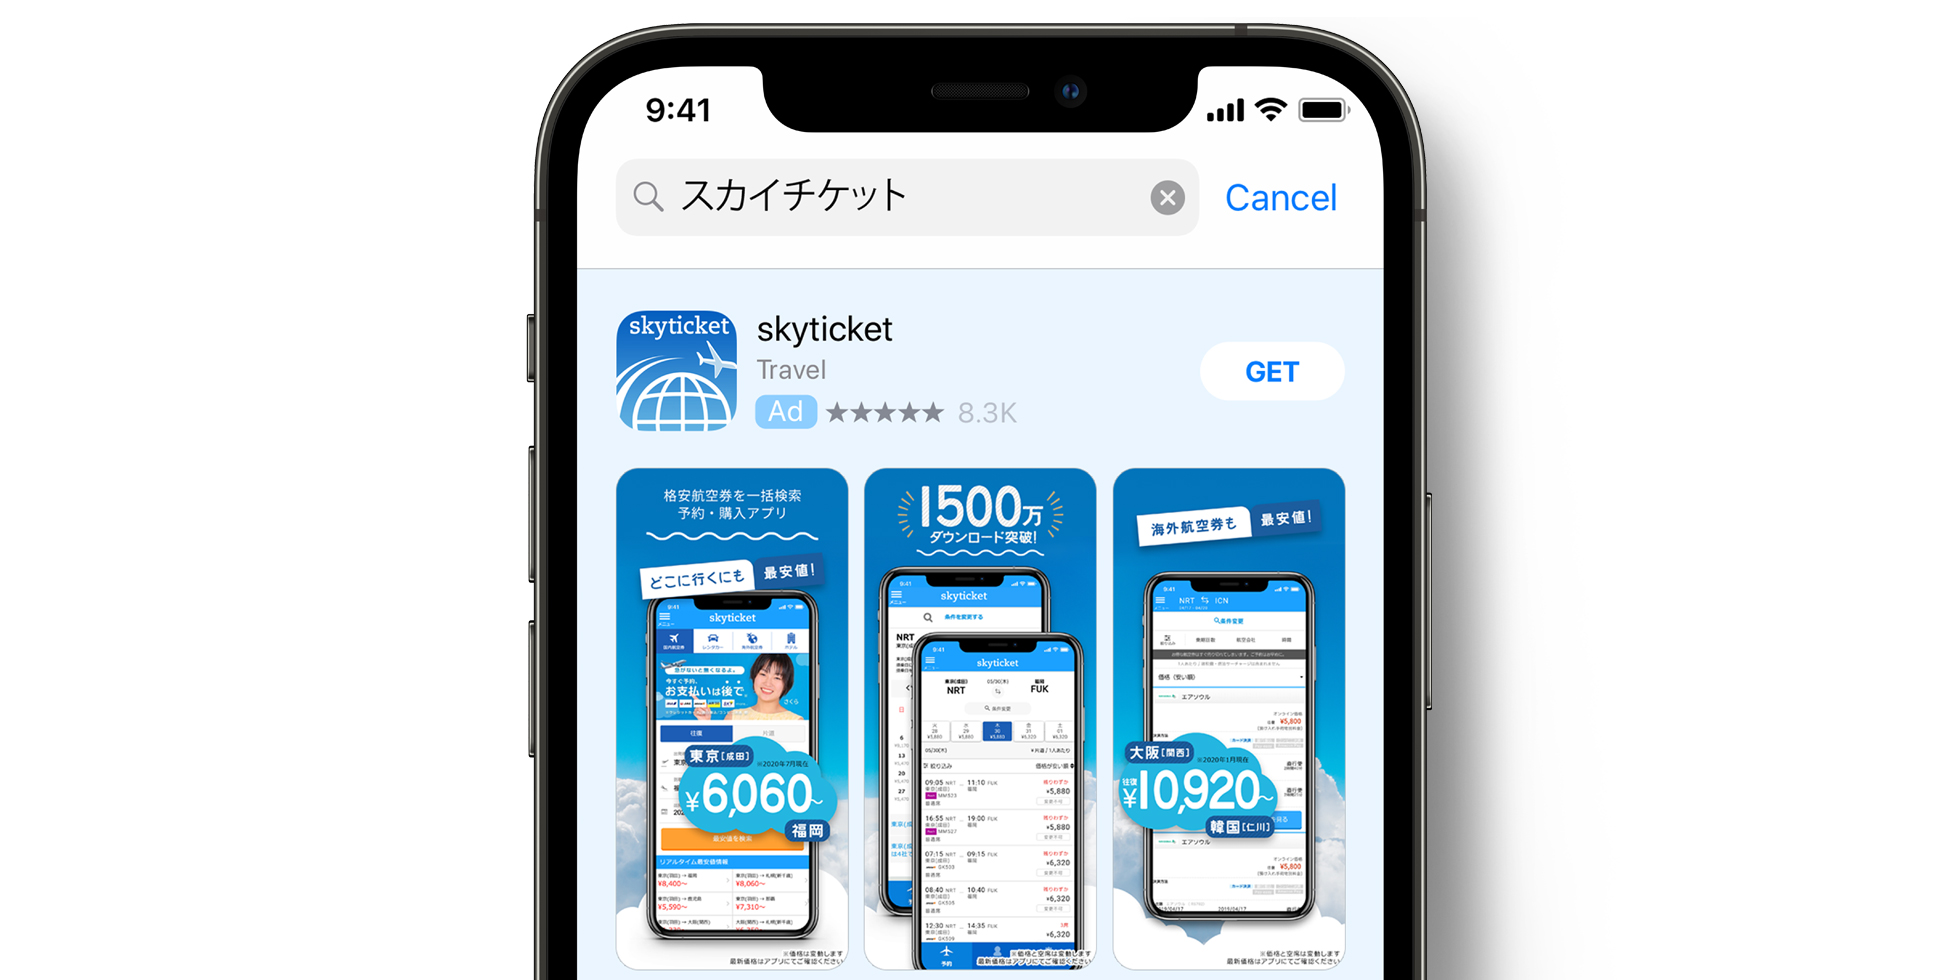 App Store의 Skyticket 광고